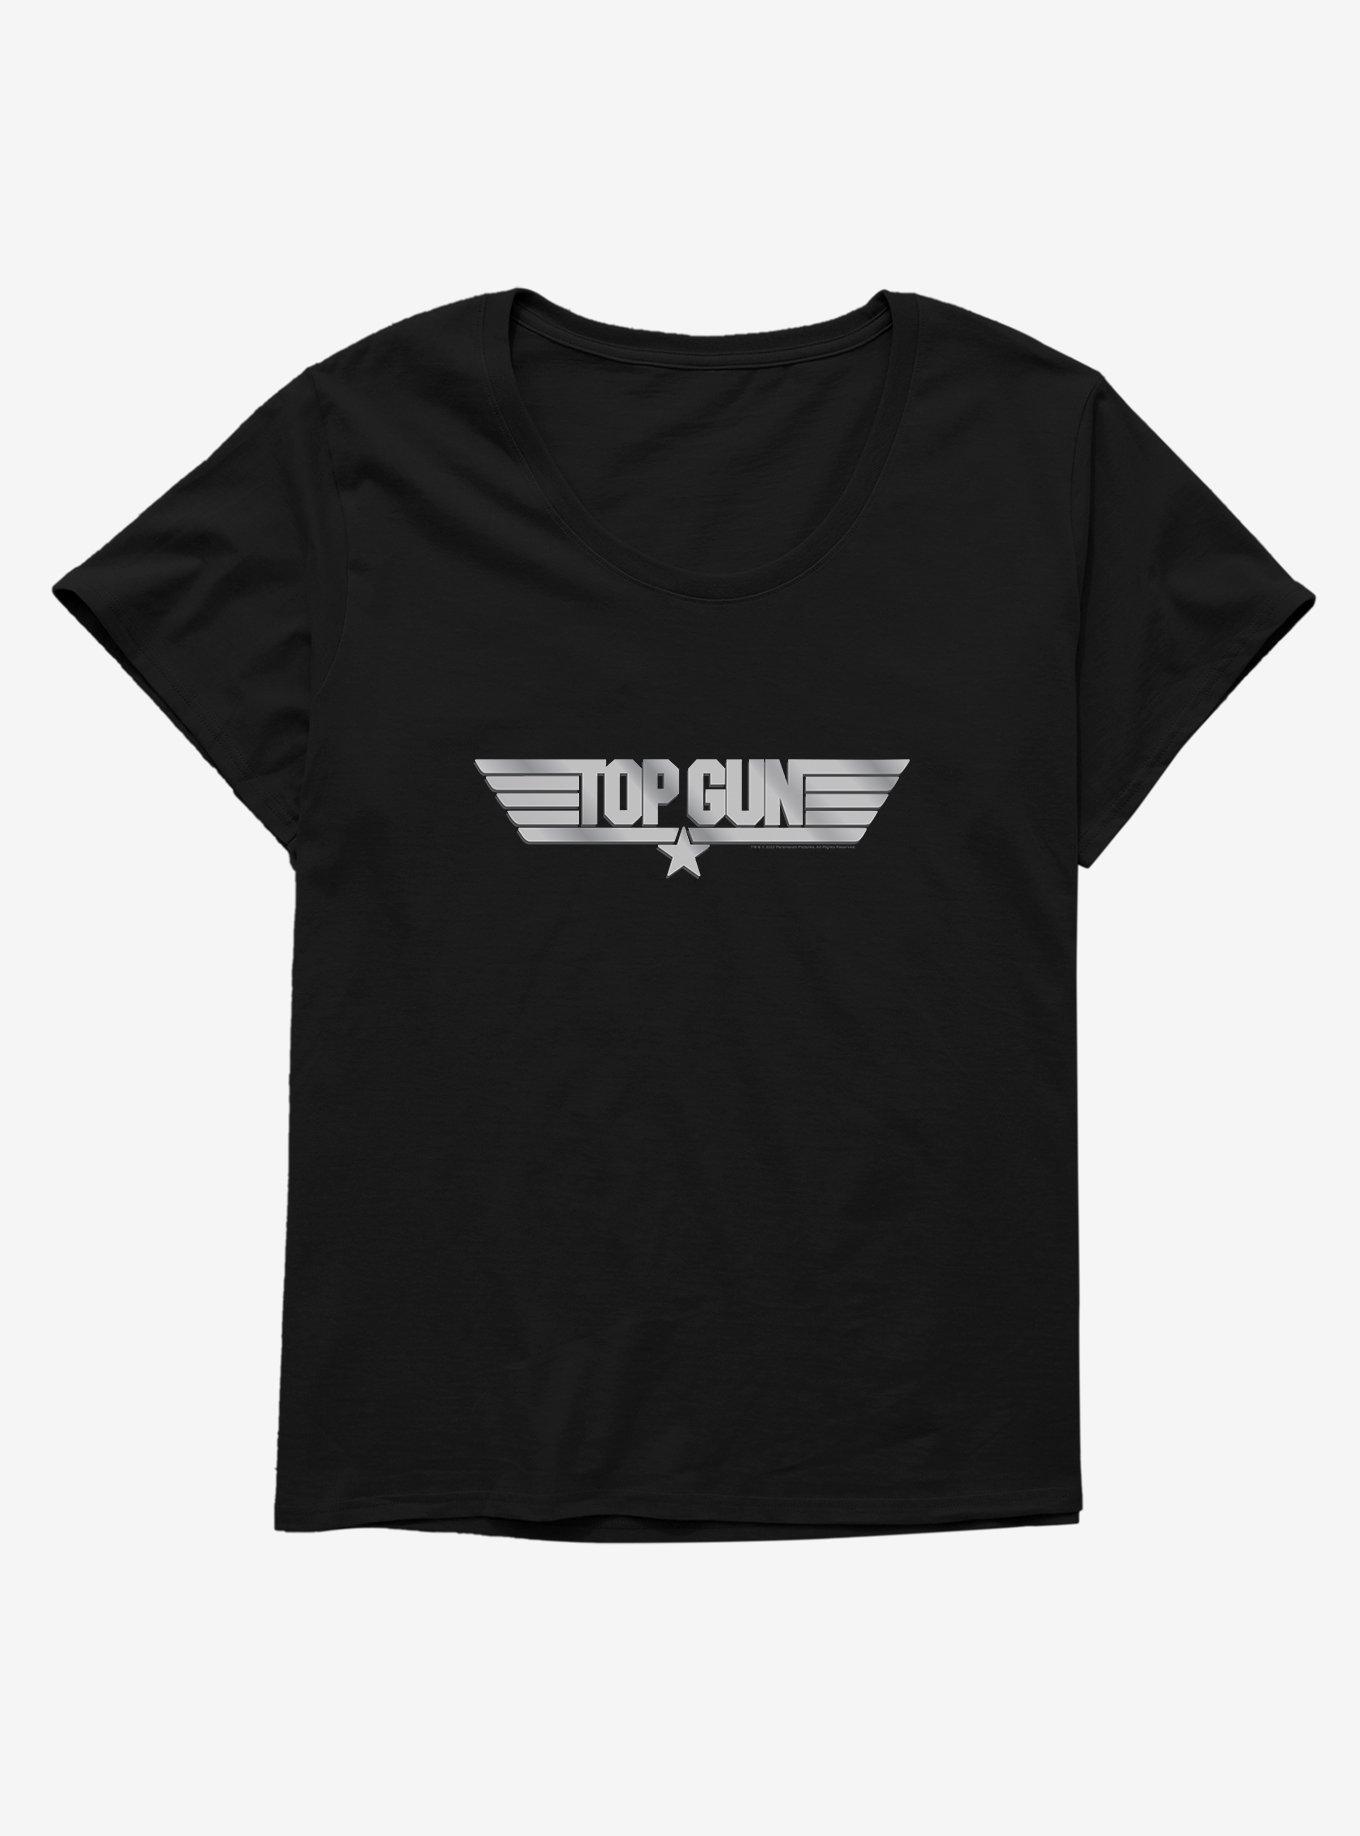 Top Gun Metal Logo Womens T-Shirt Plus Size